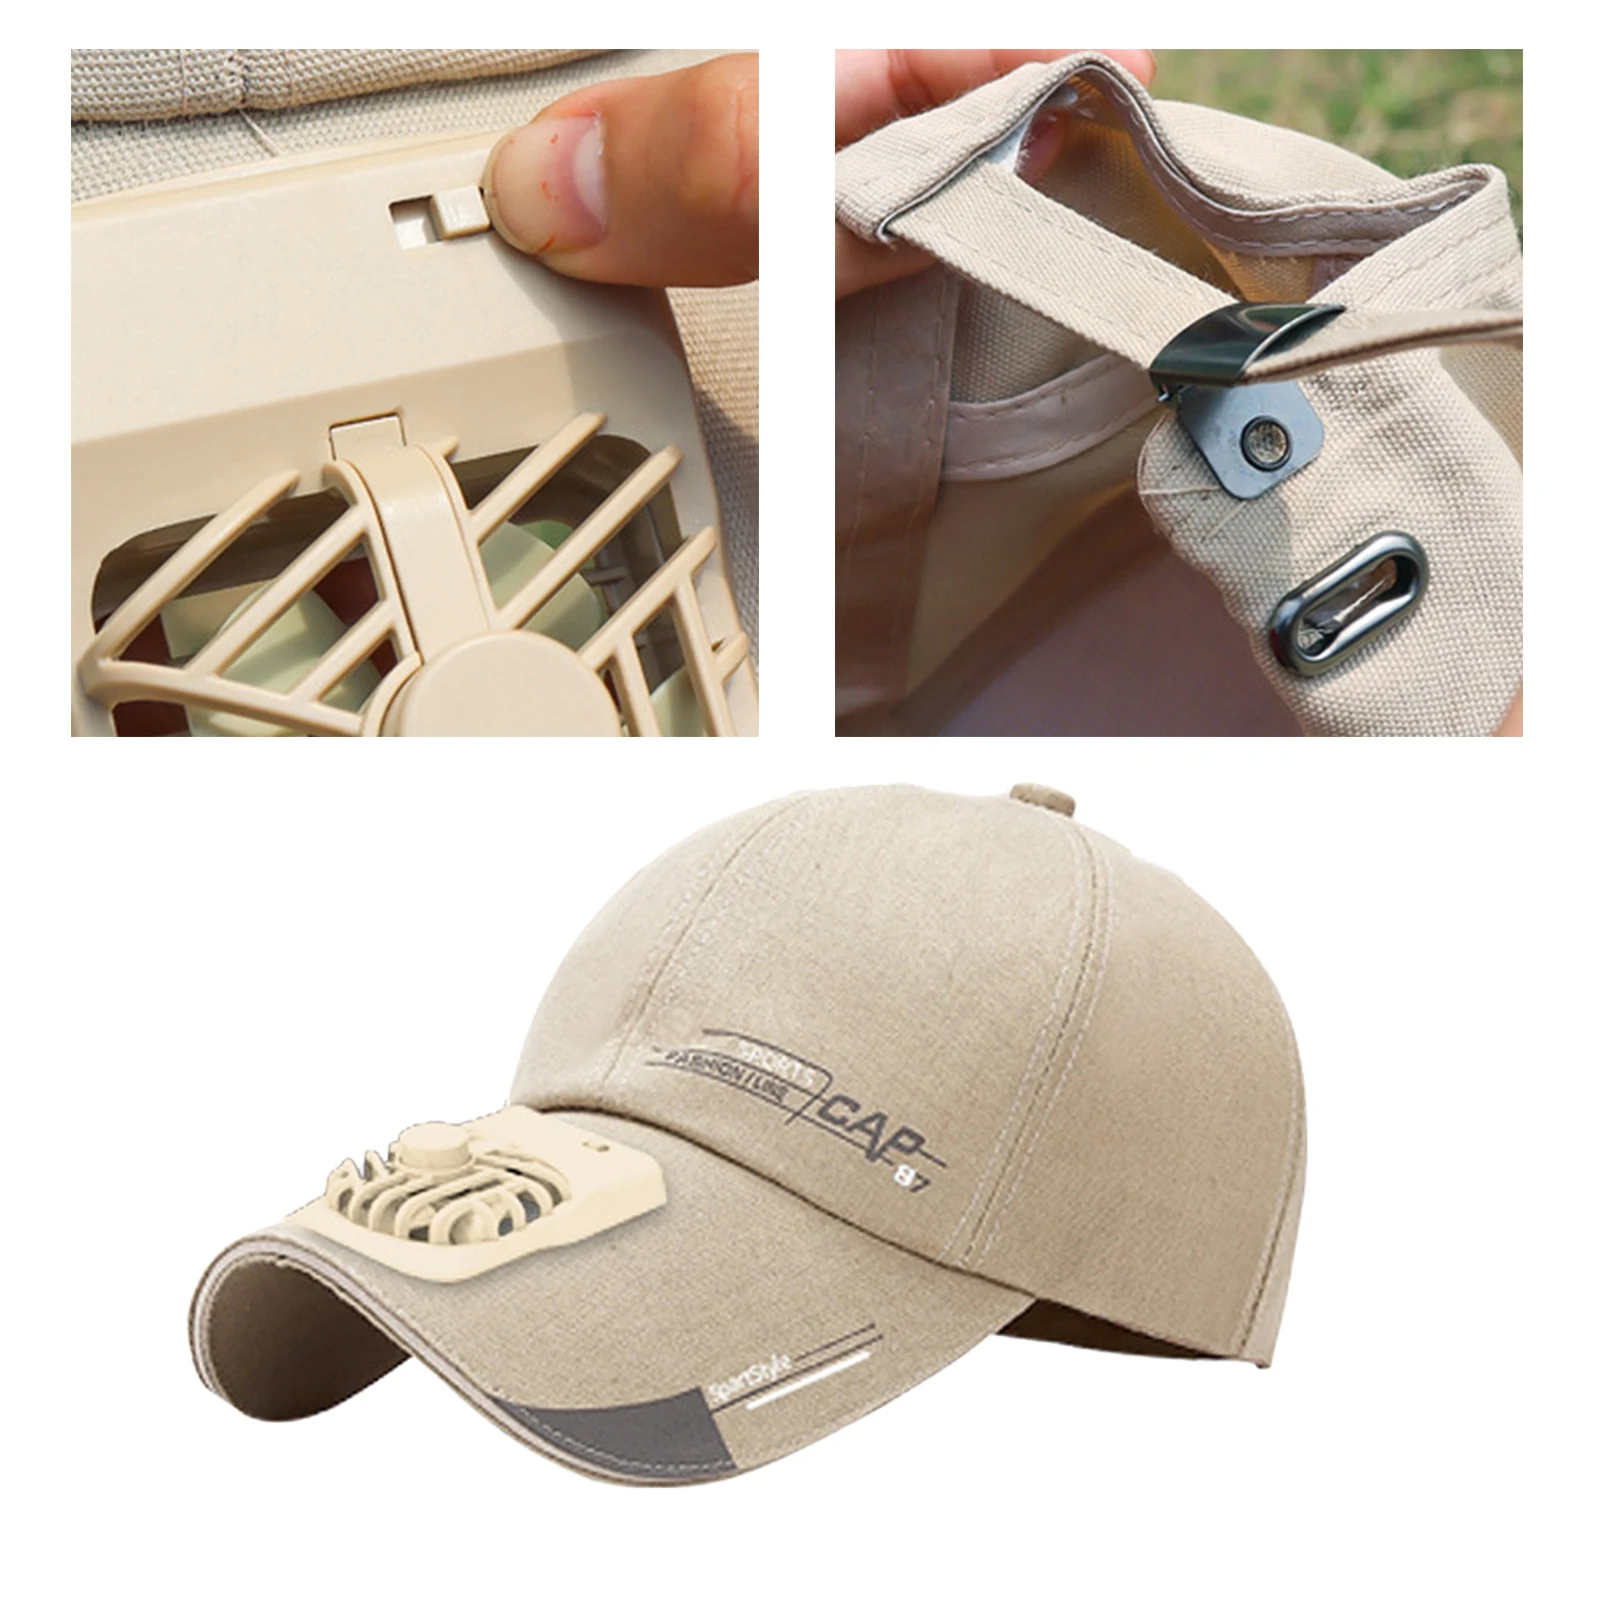 USB Cooling Fan Baseball Cap Outdoor Sun Hat Camping Travel Sun Shade Cap